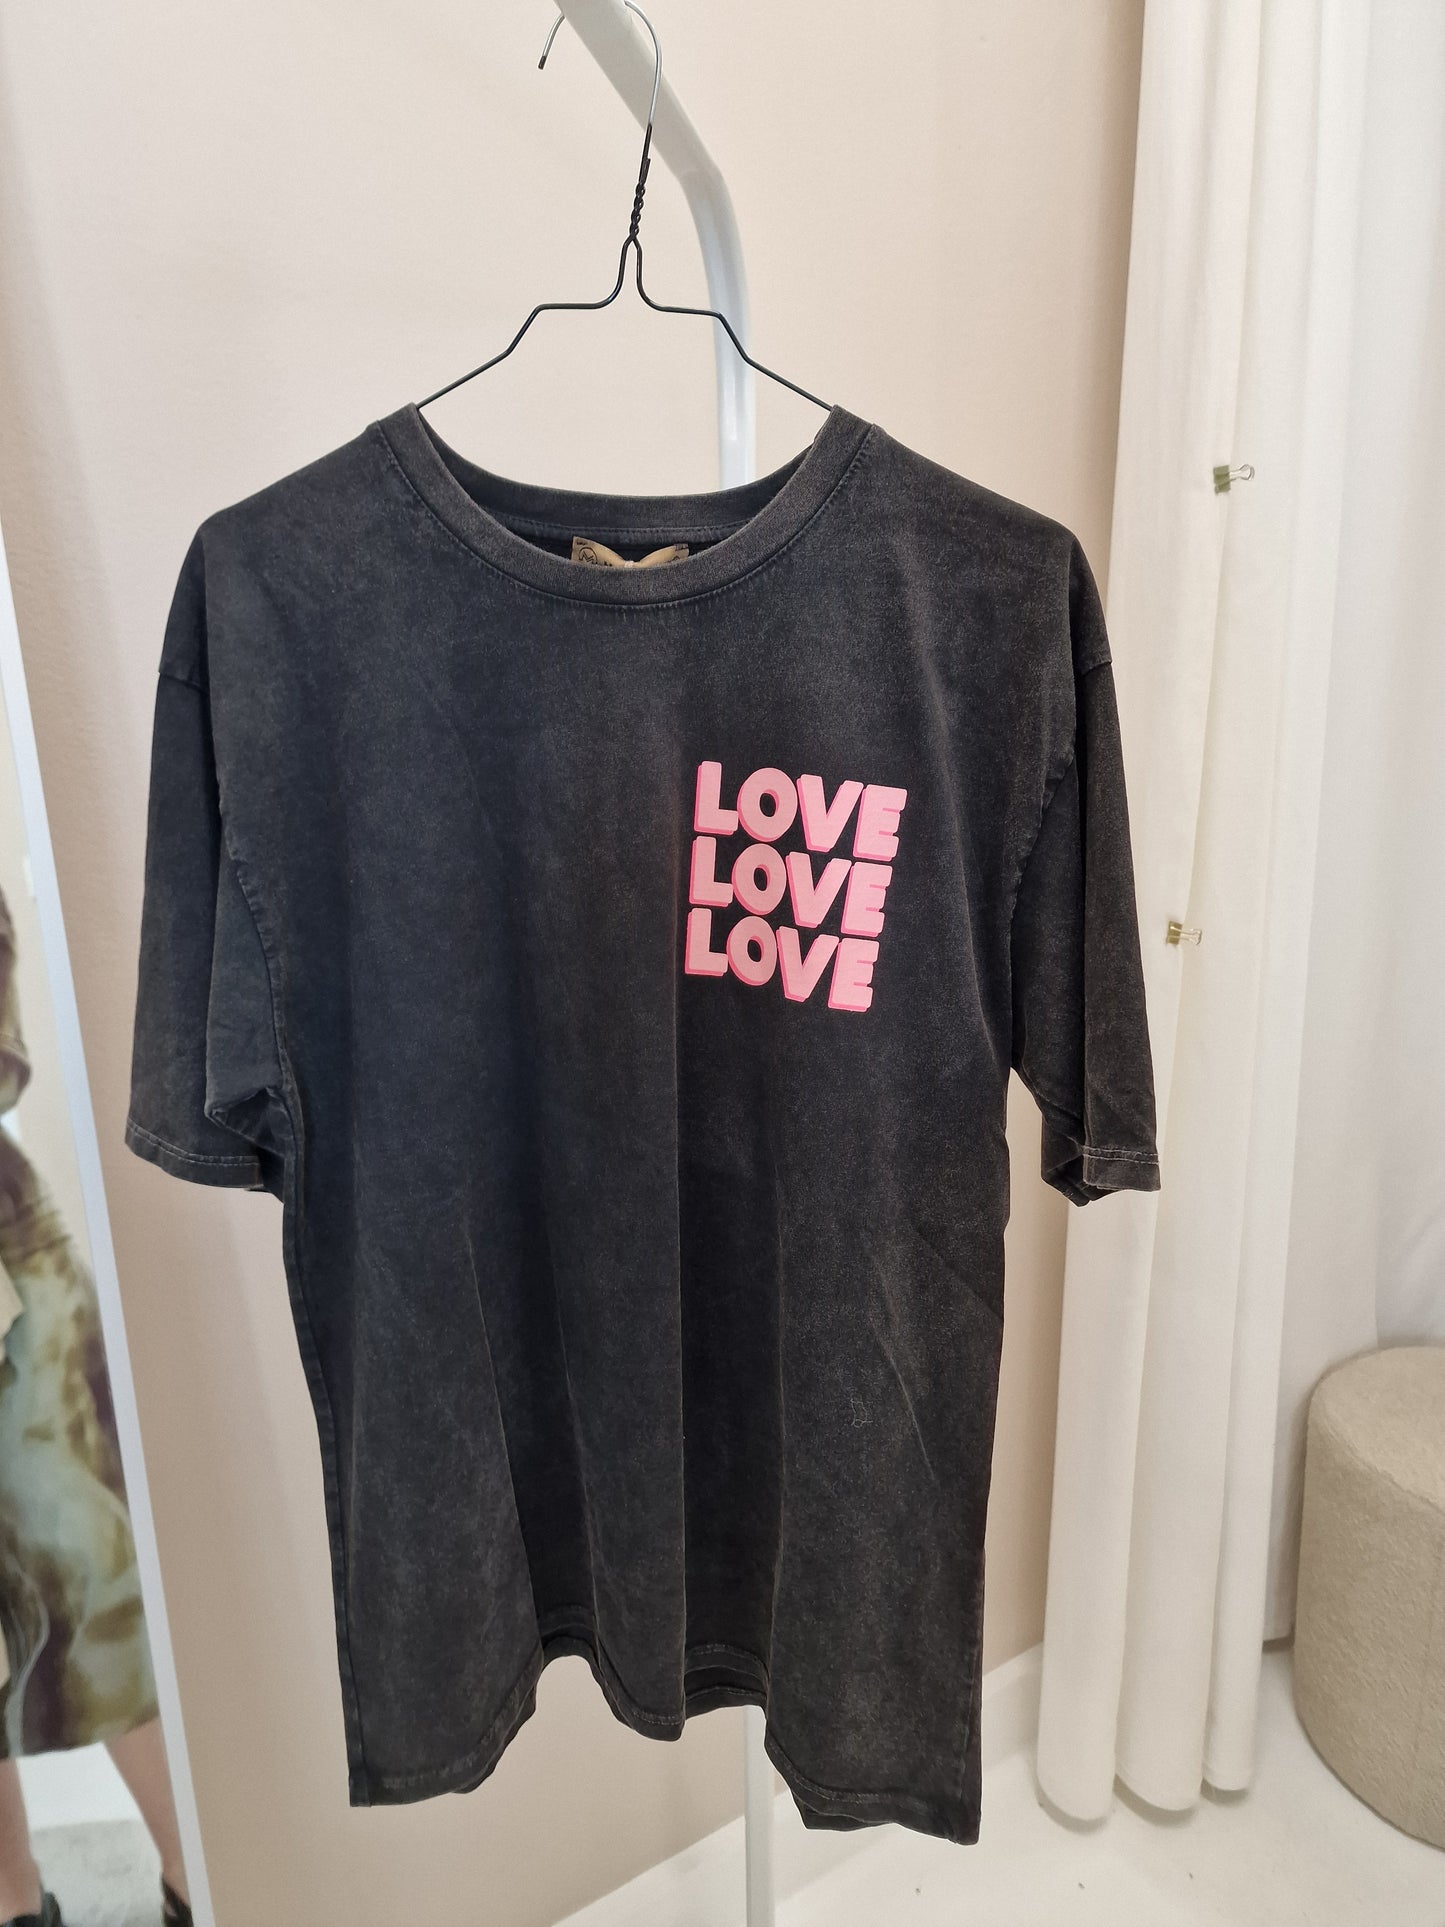 Love shirt grey/black pink